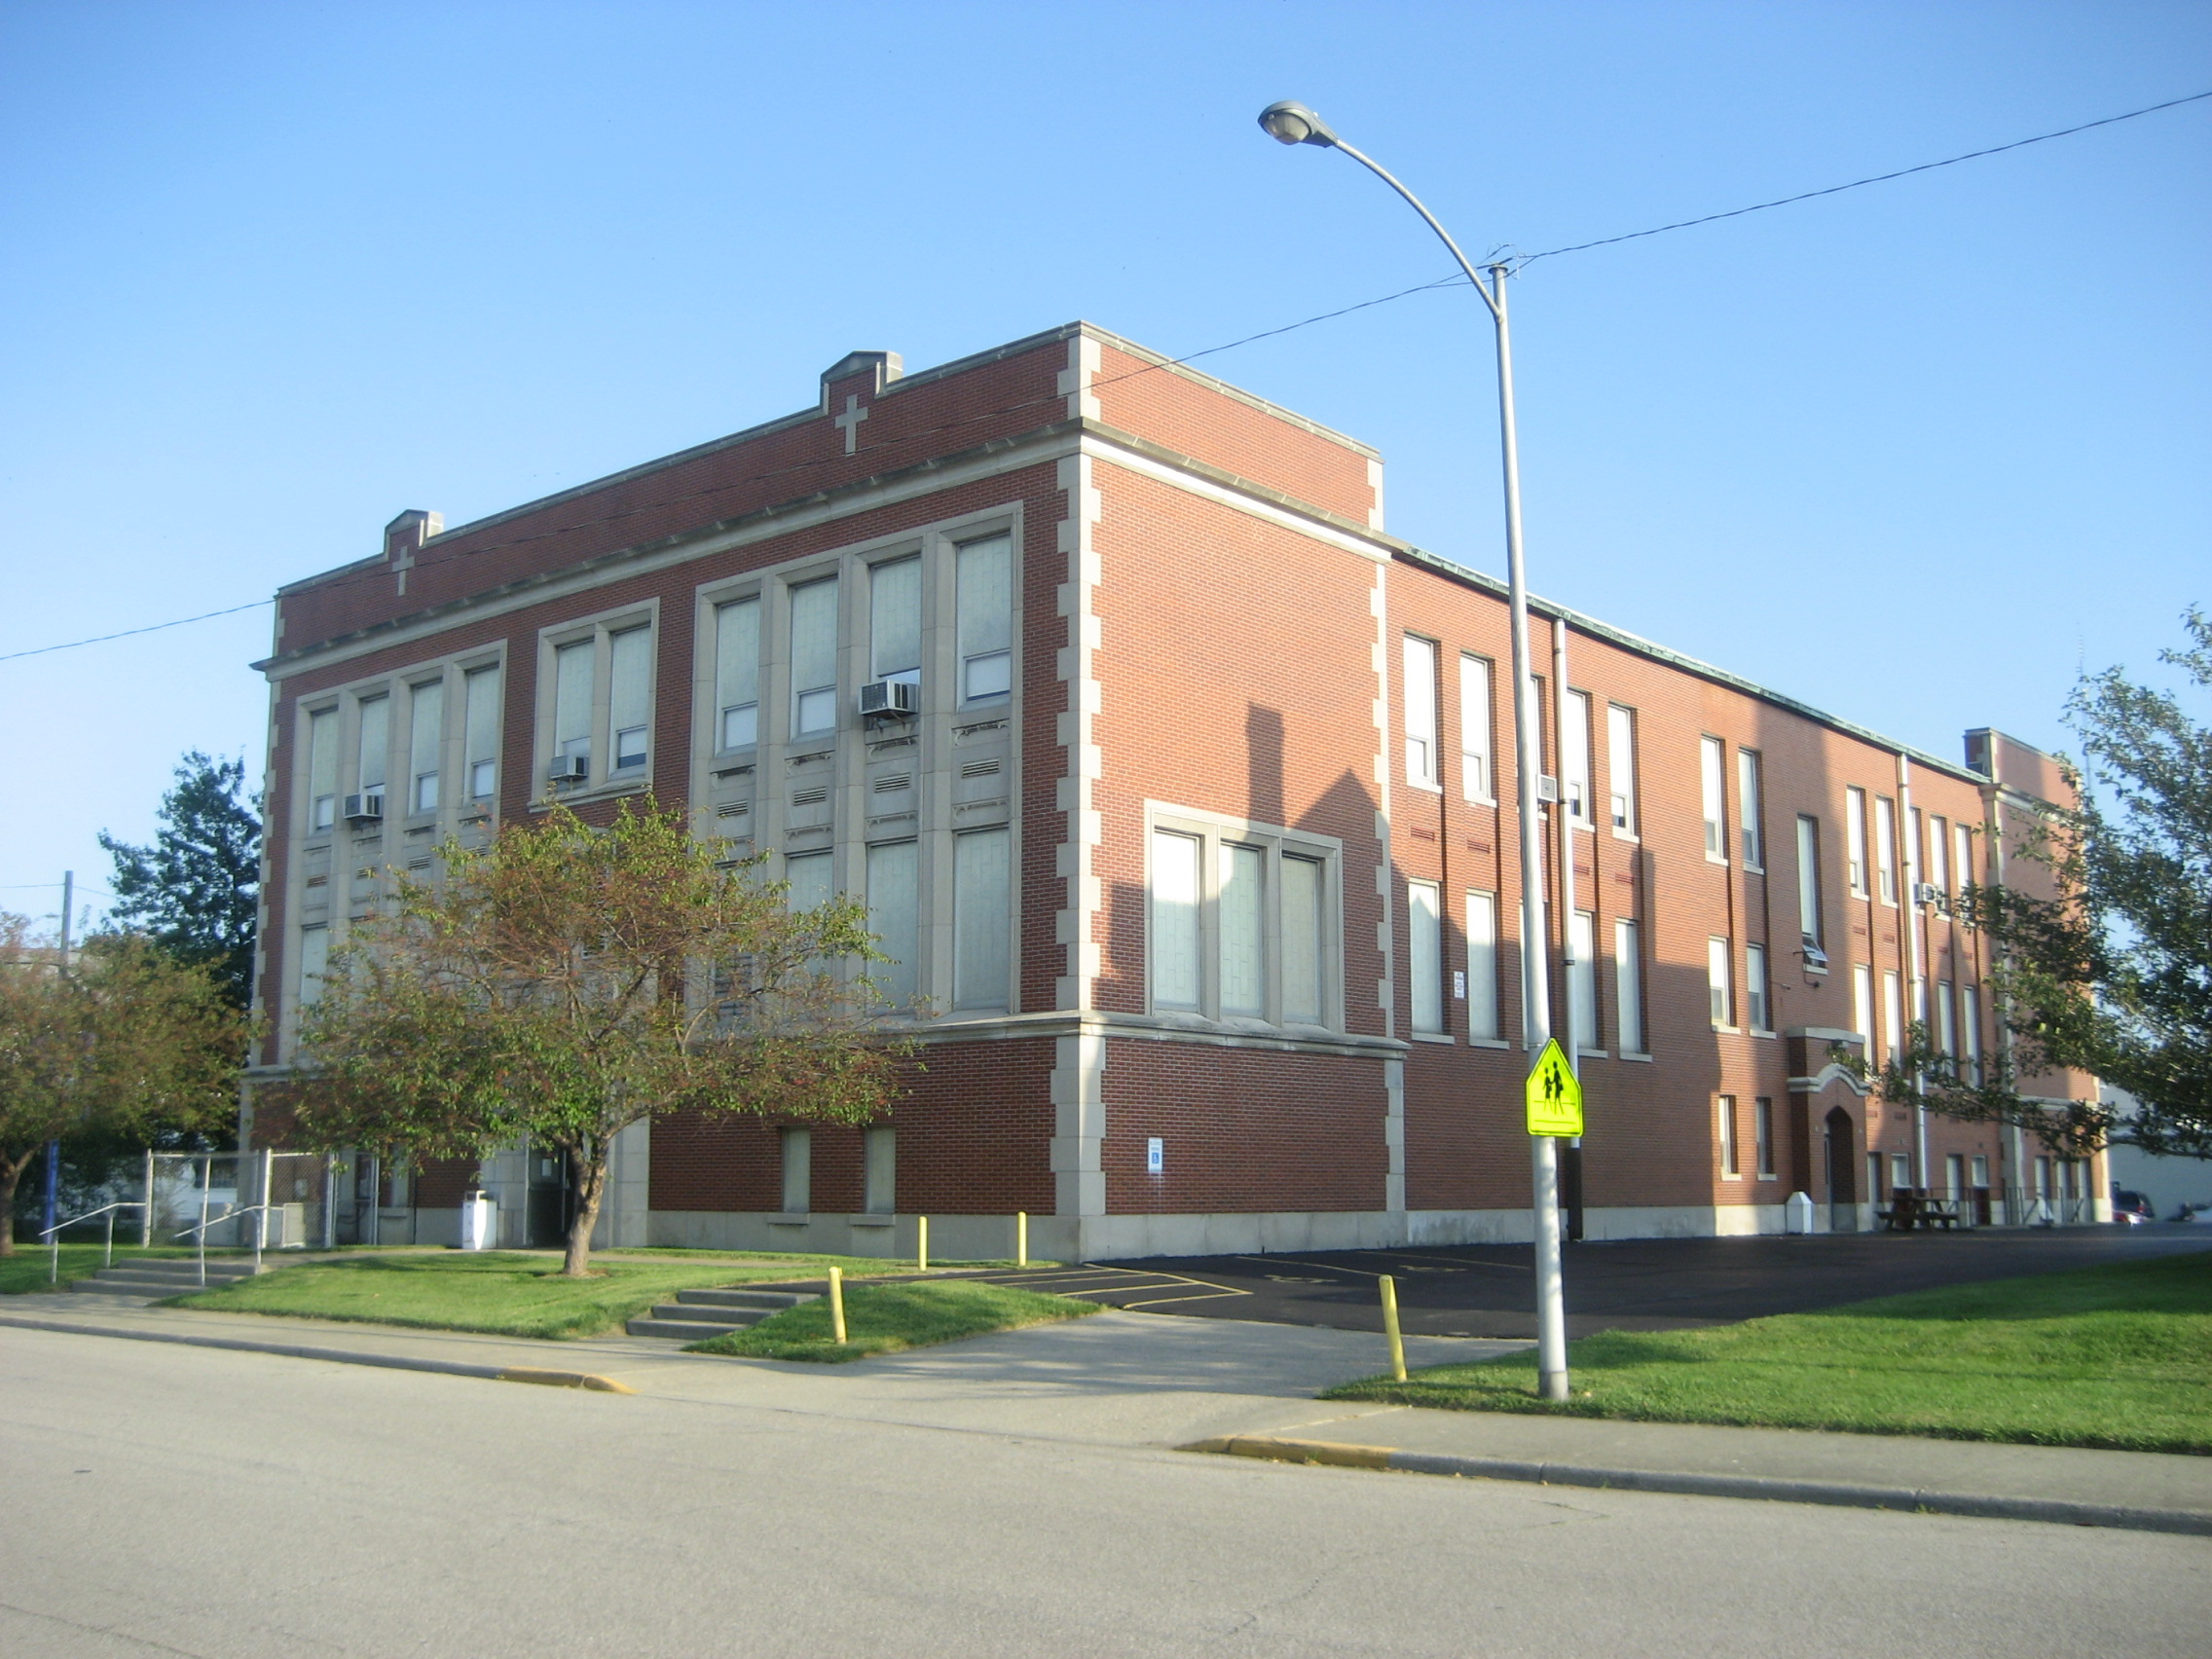 St. Boniface School